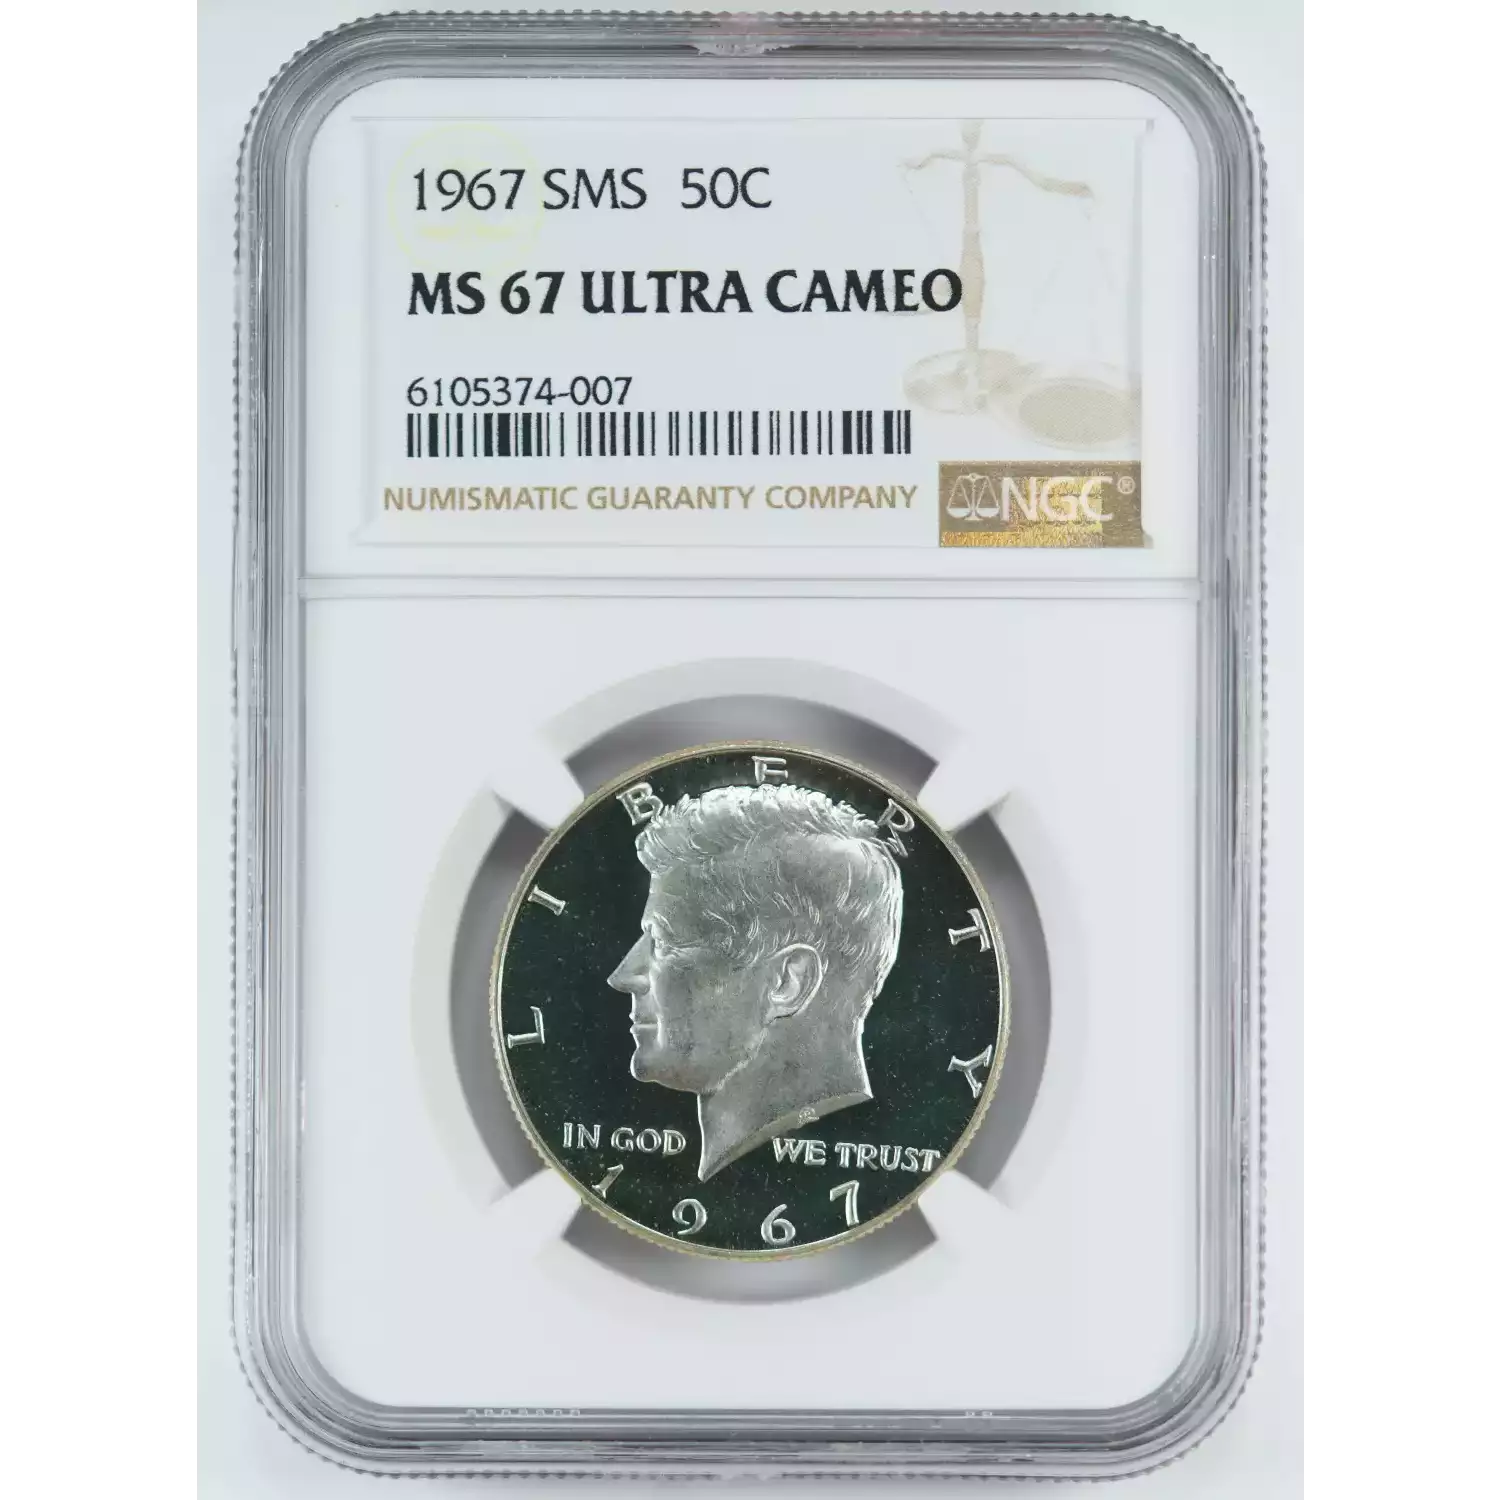 1967 SMS  ULTRA CAMEO (3)